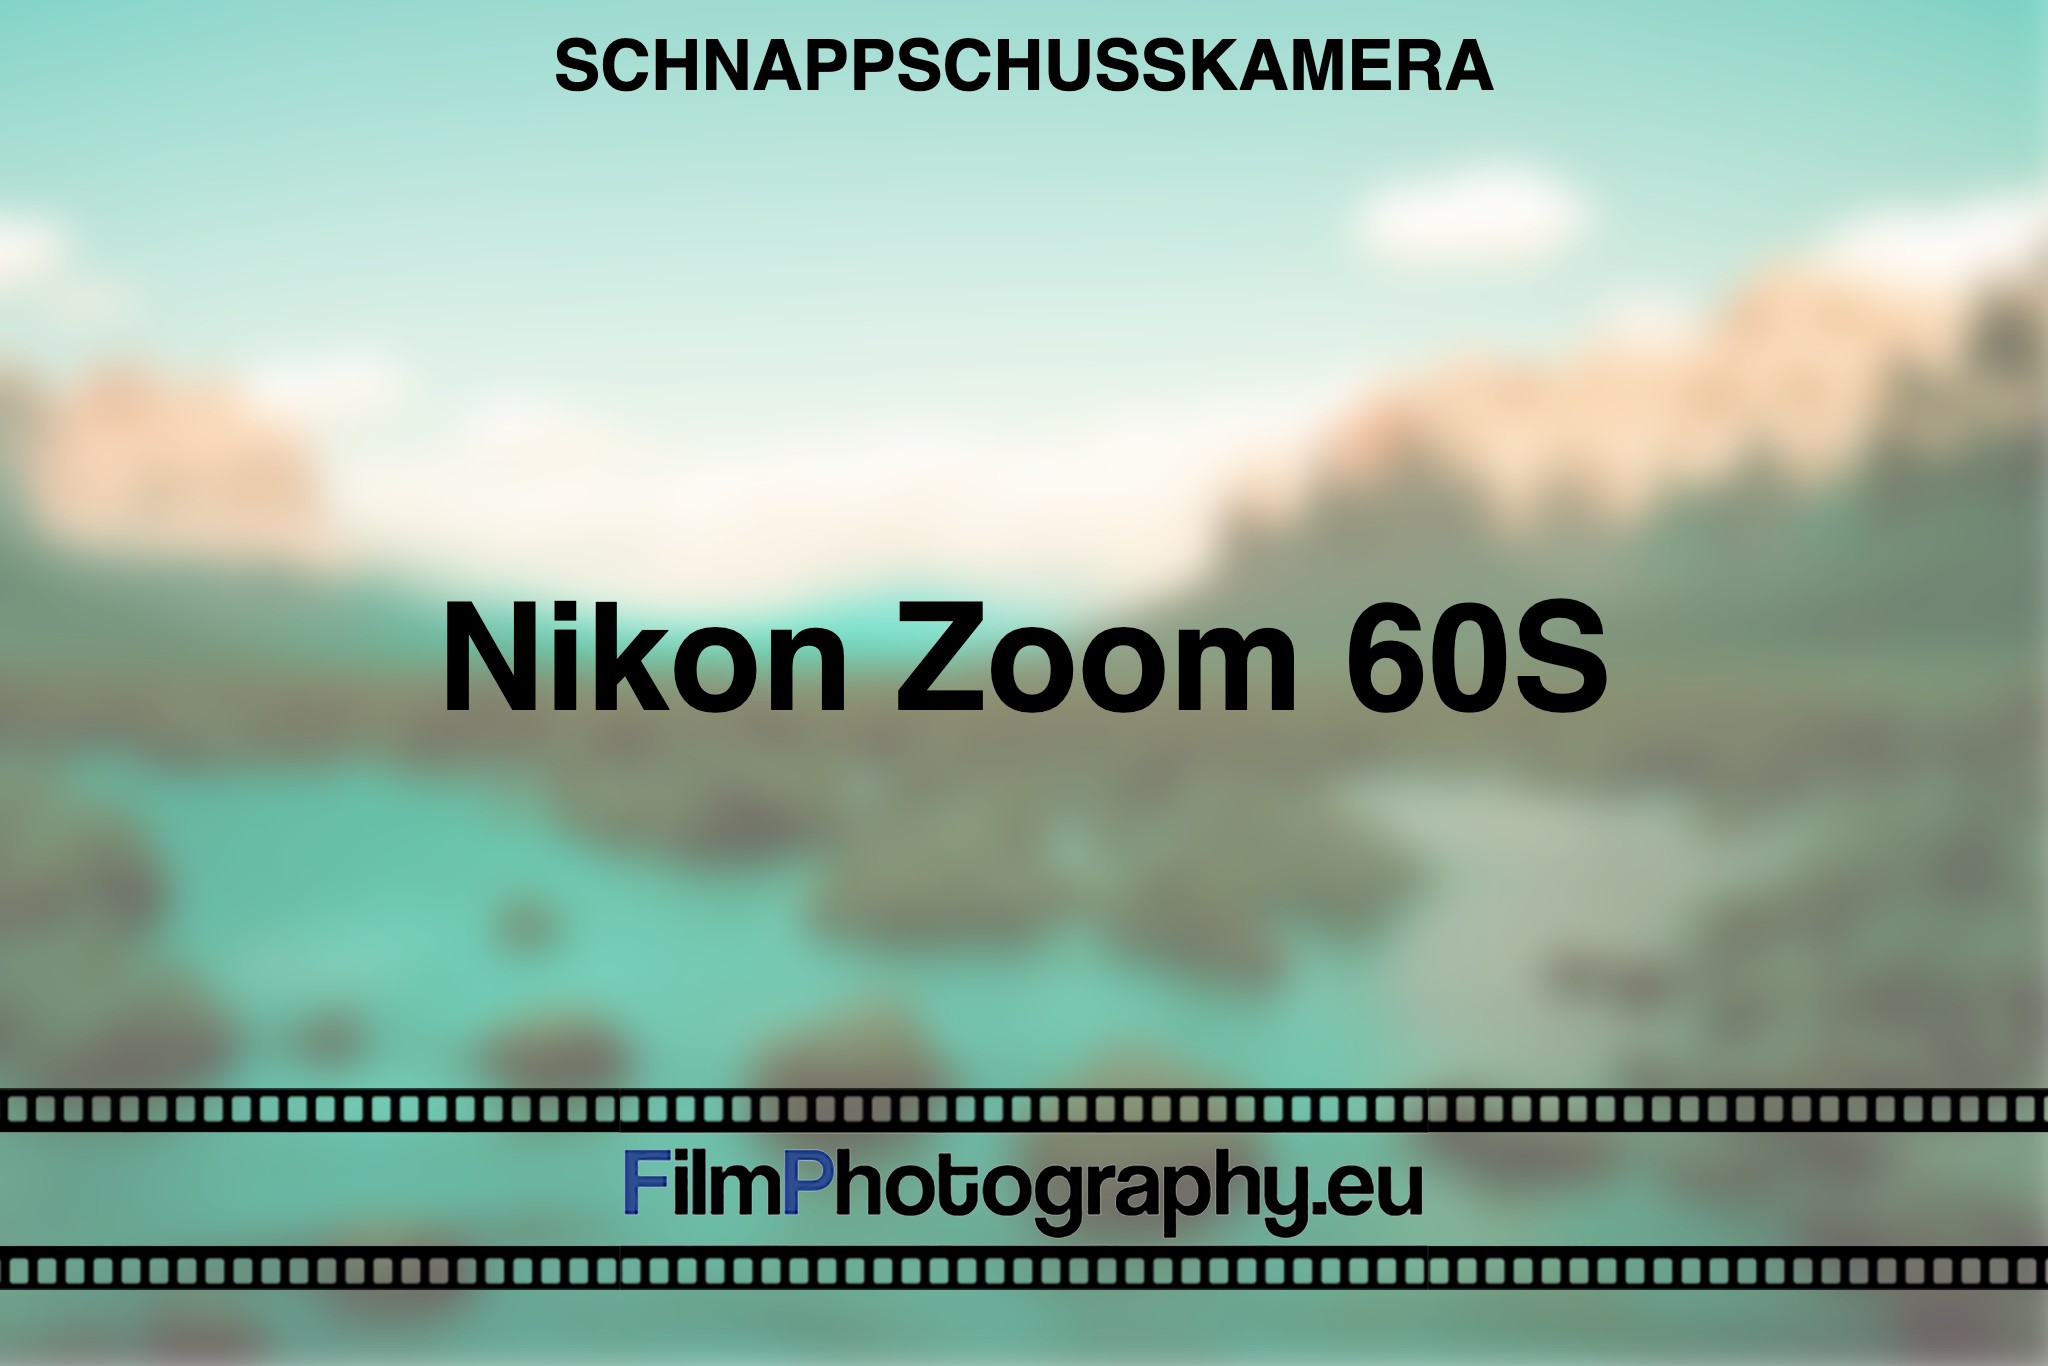 nikon-zoom-60s-schnappschusskamera-bnv